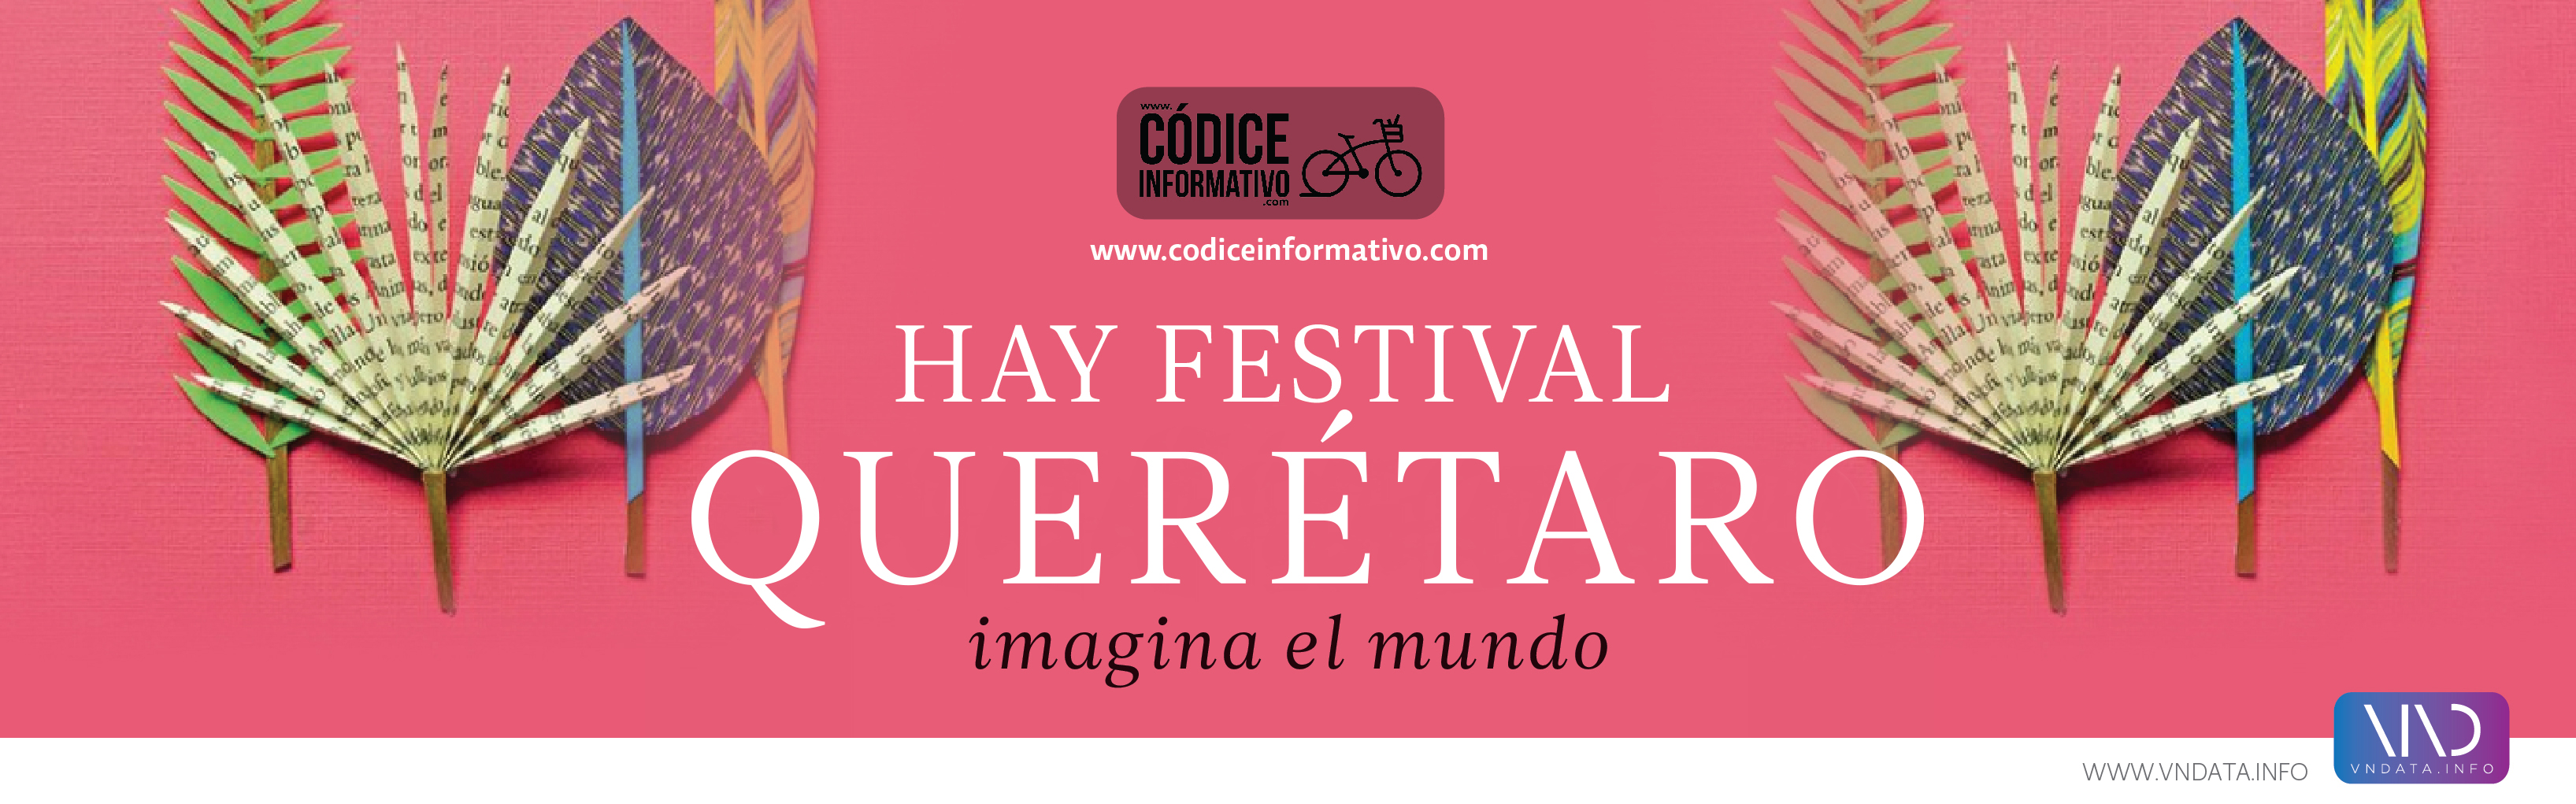  Hay festival Querétaro